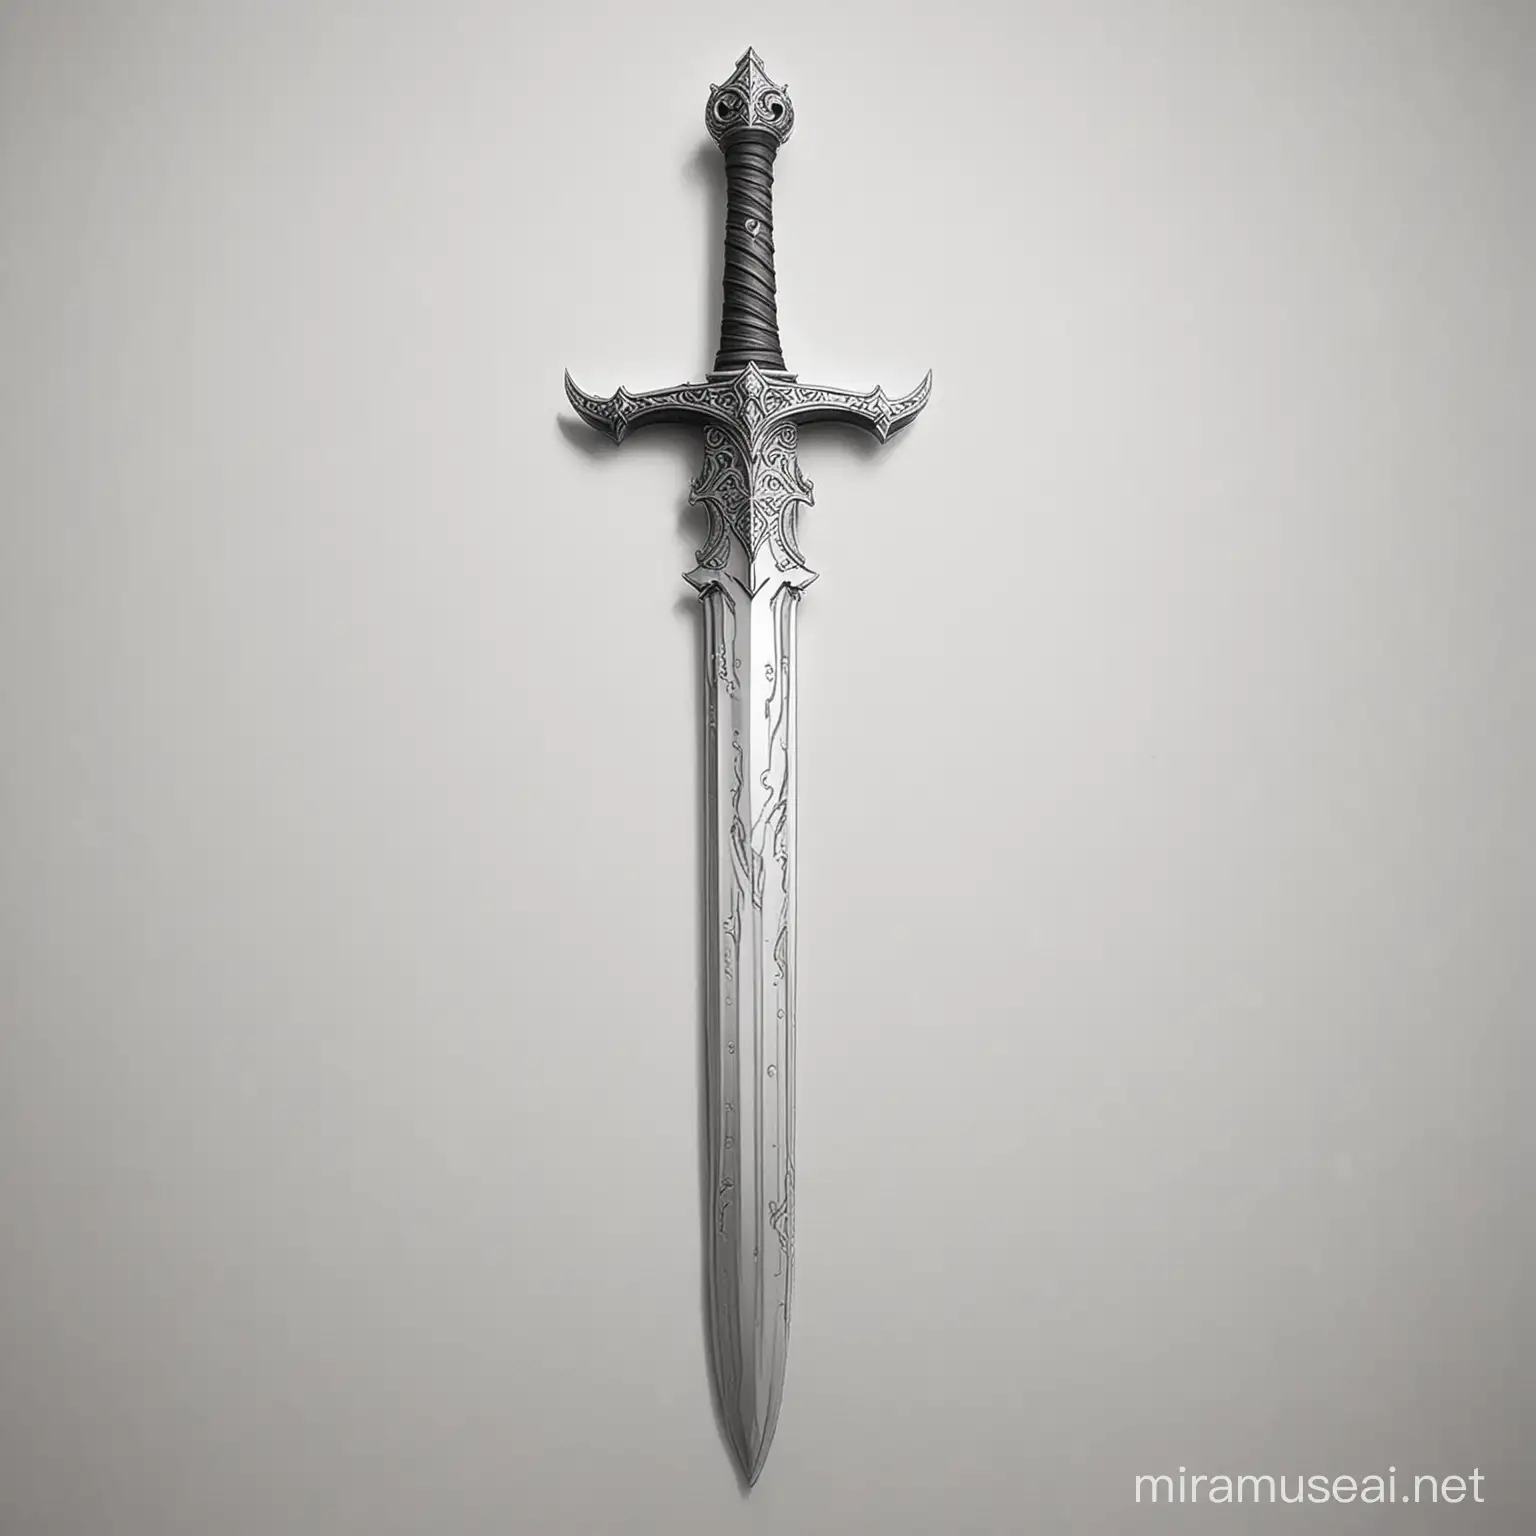 Minimalist Sword Sketch on White Background